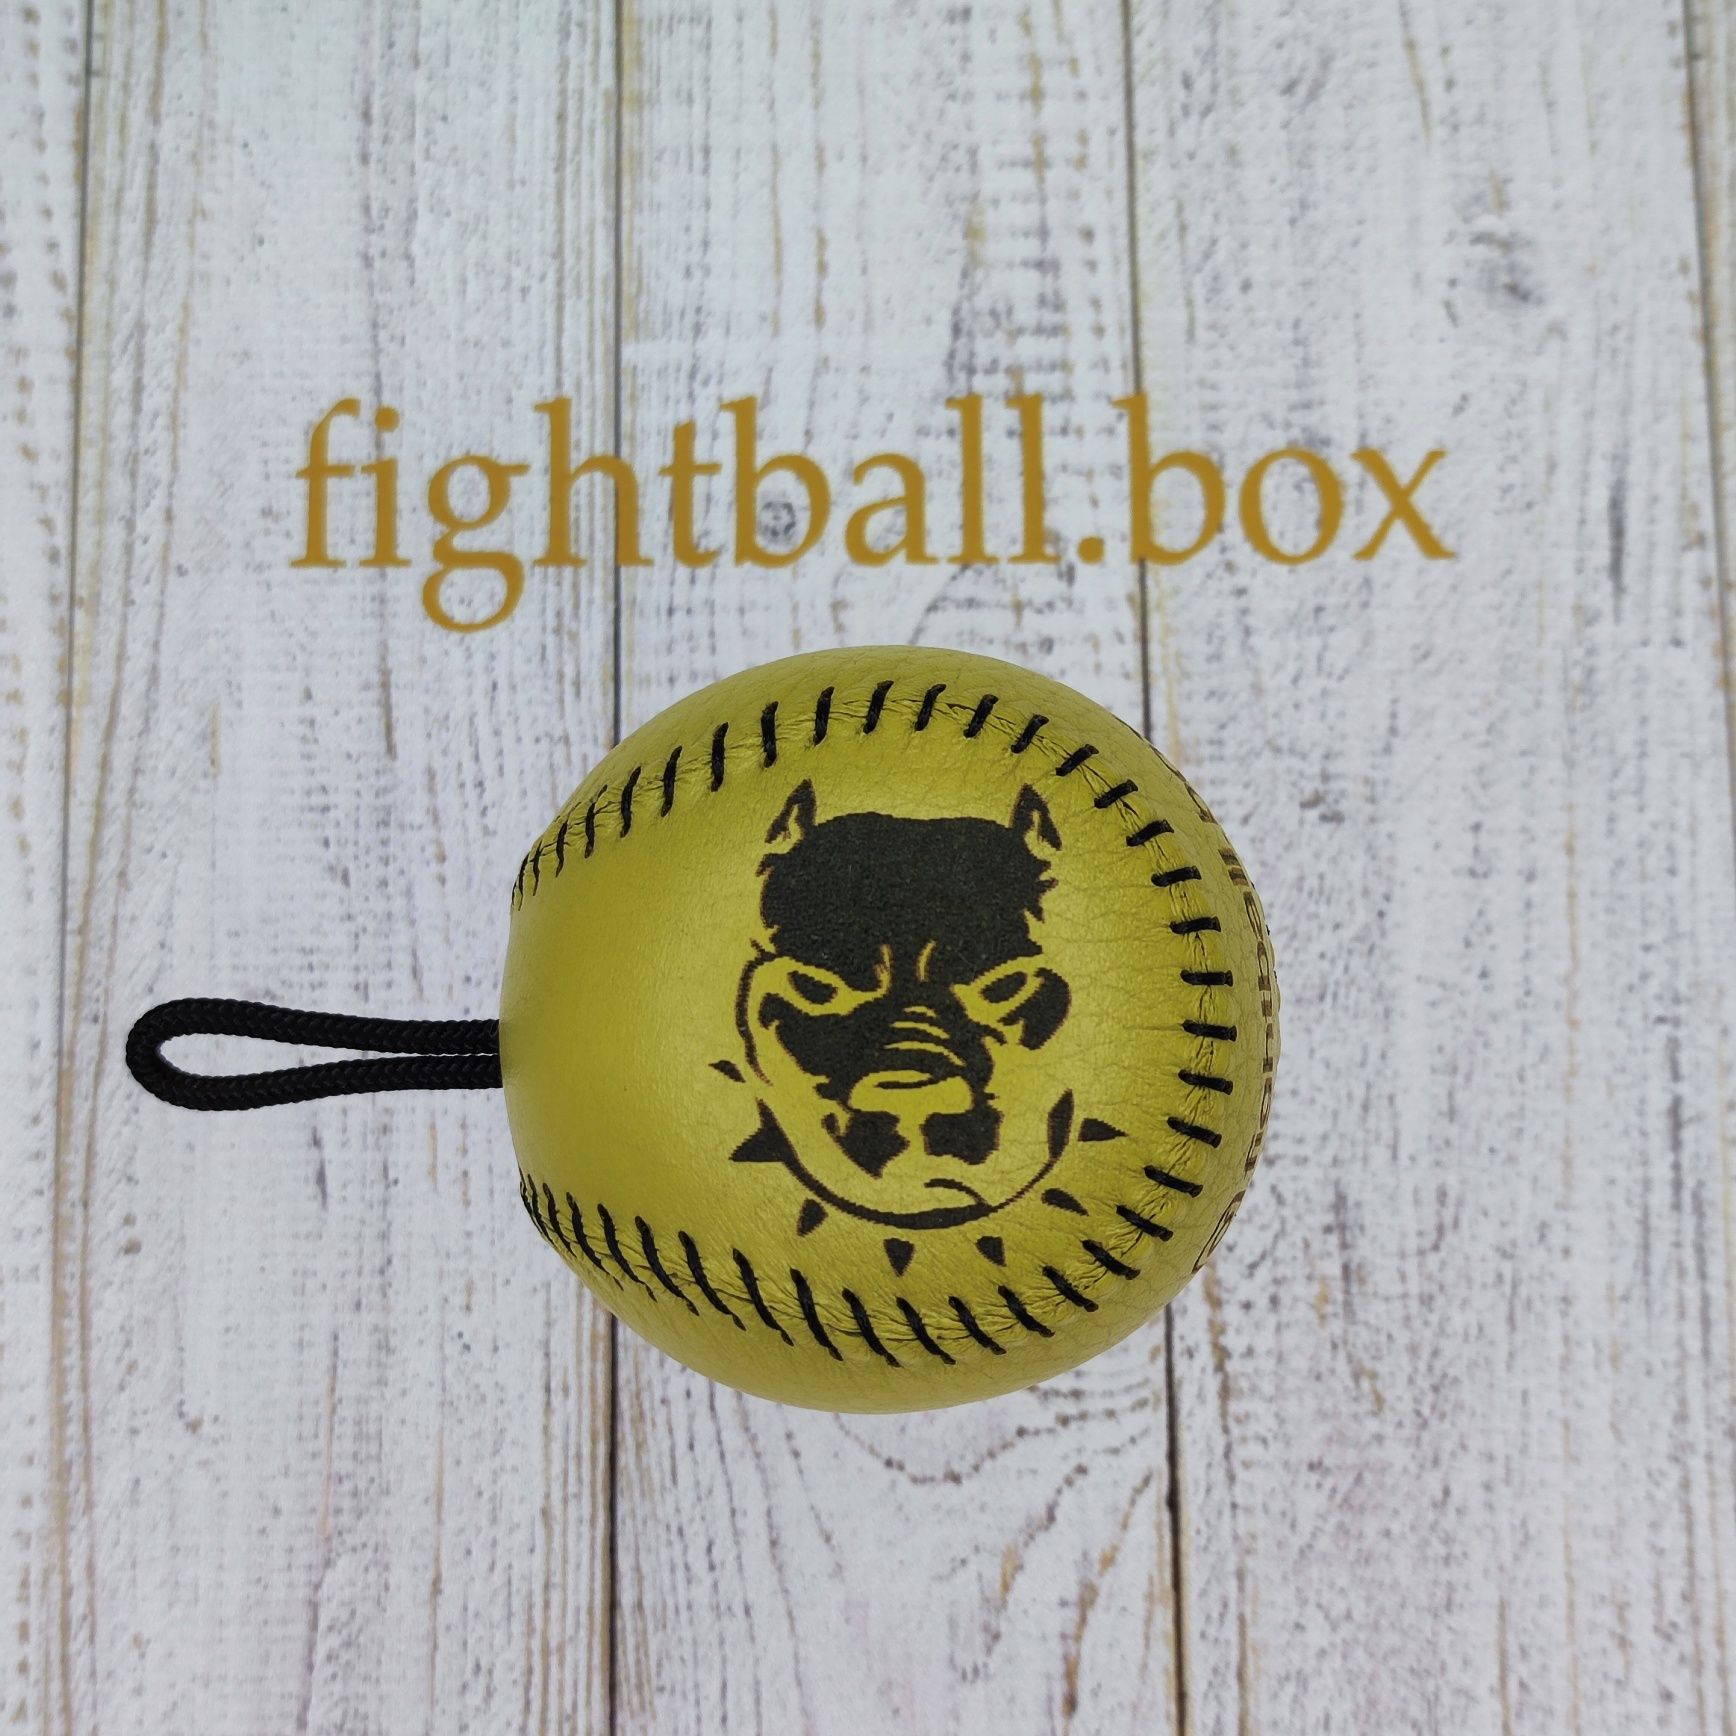 fightball box файт болл тренажёр для бокса мини груша мяч кожа файтбол